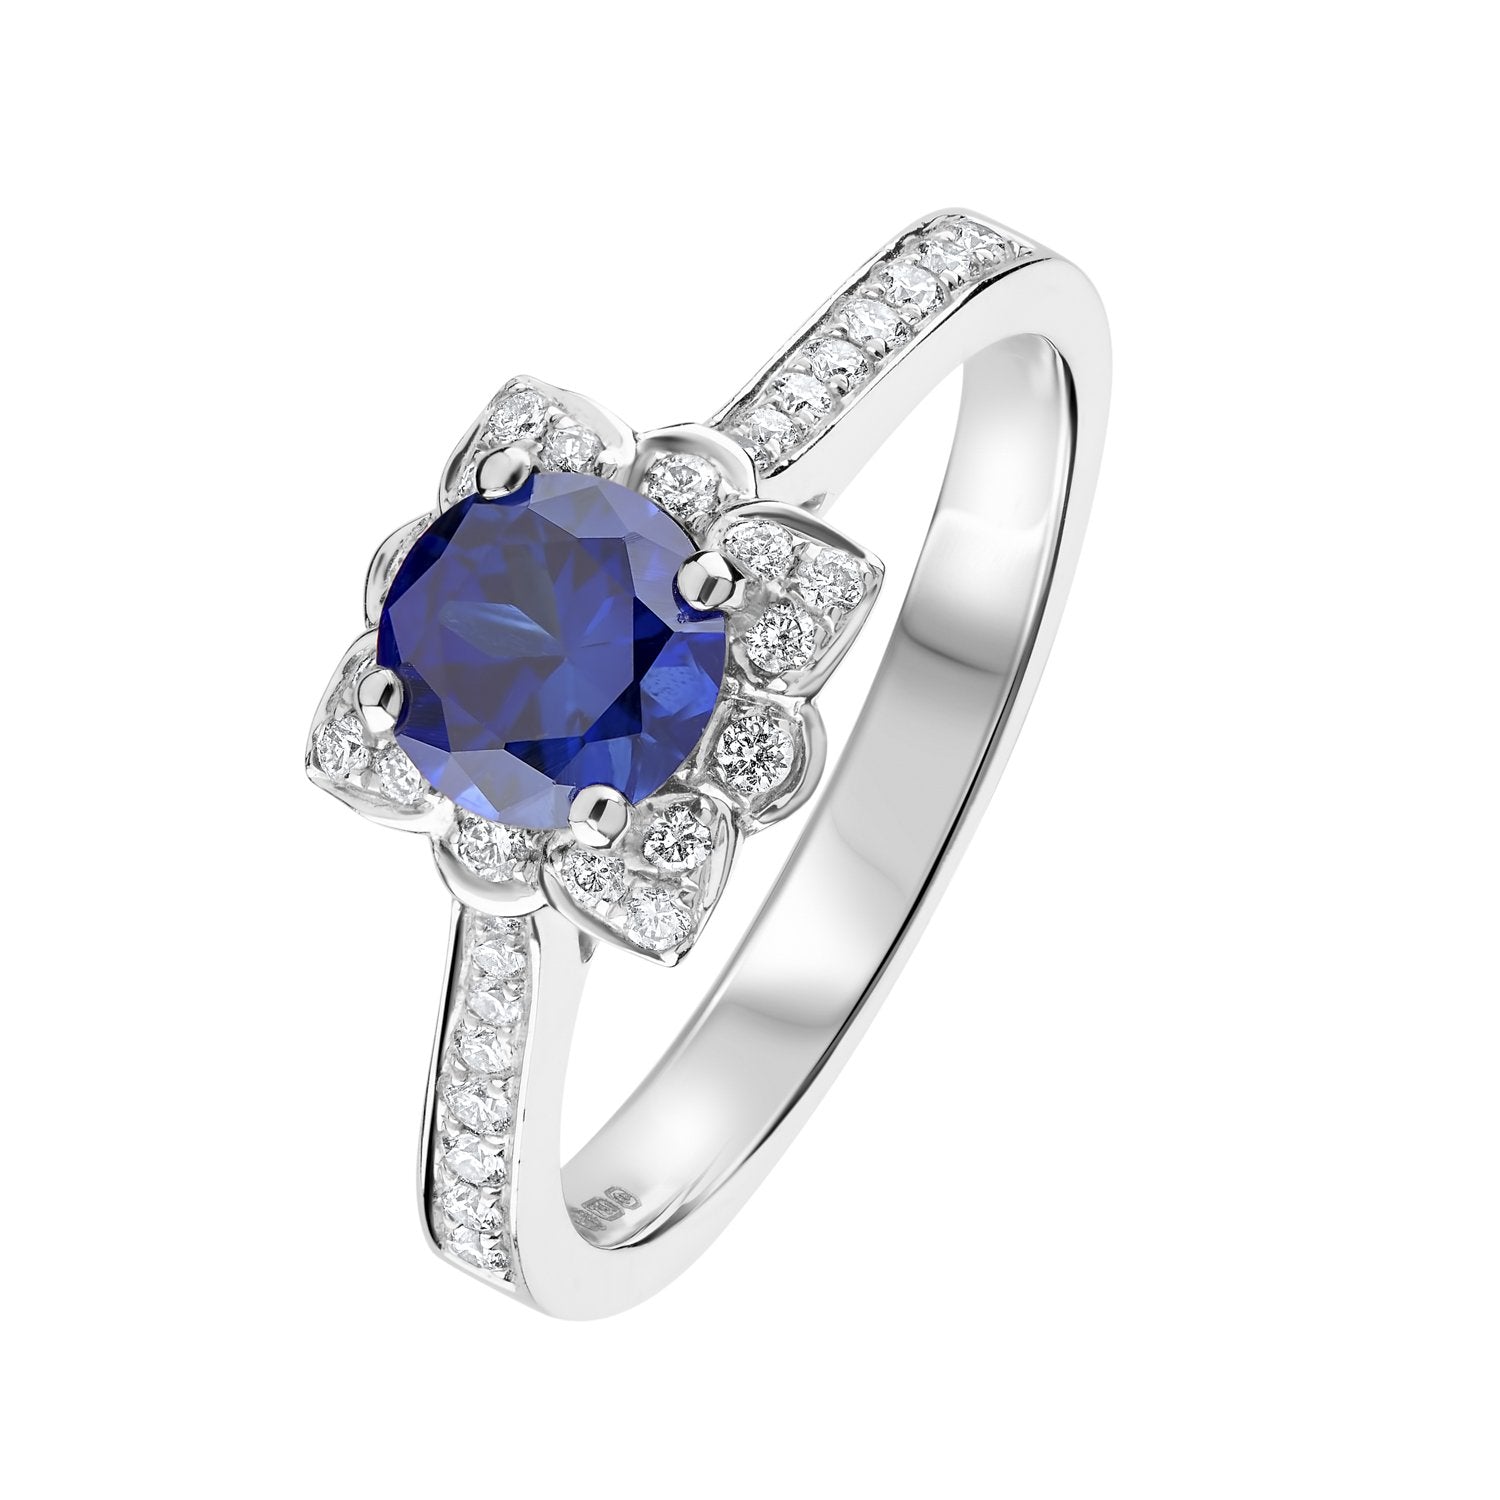 White Gold Diamond Ring with Cushion Cute Blue Sapphire